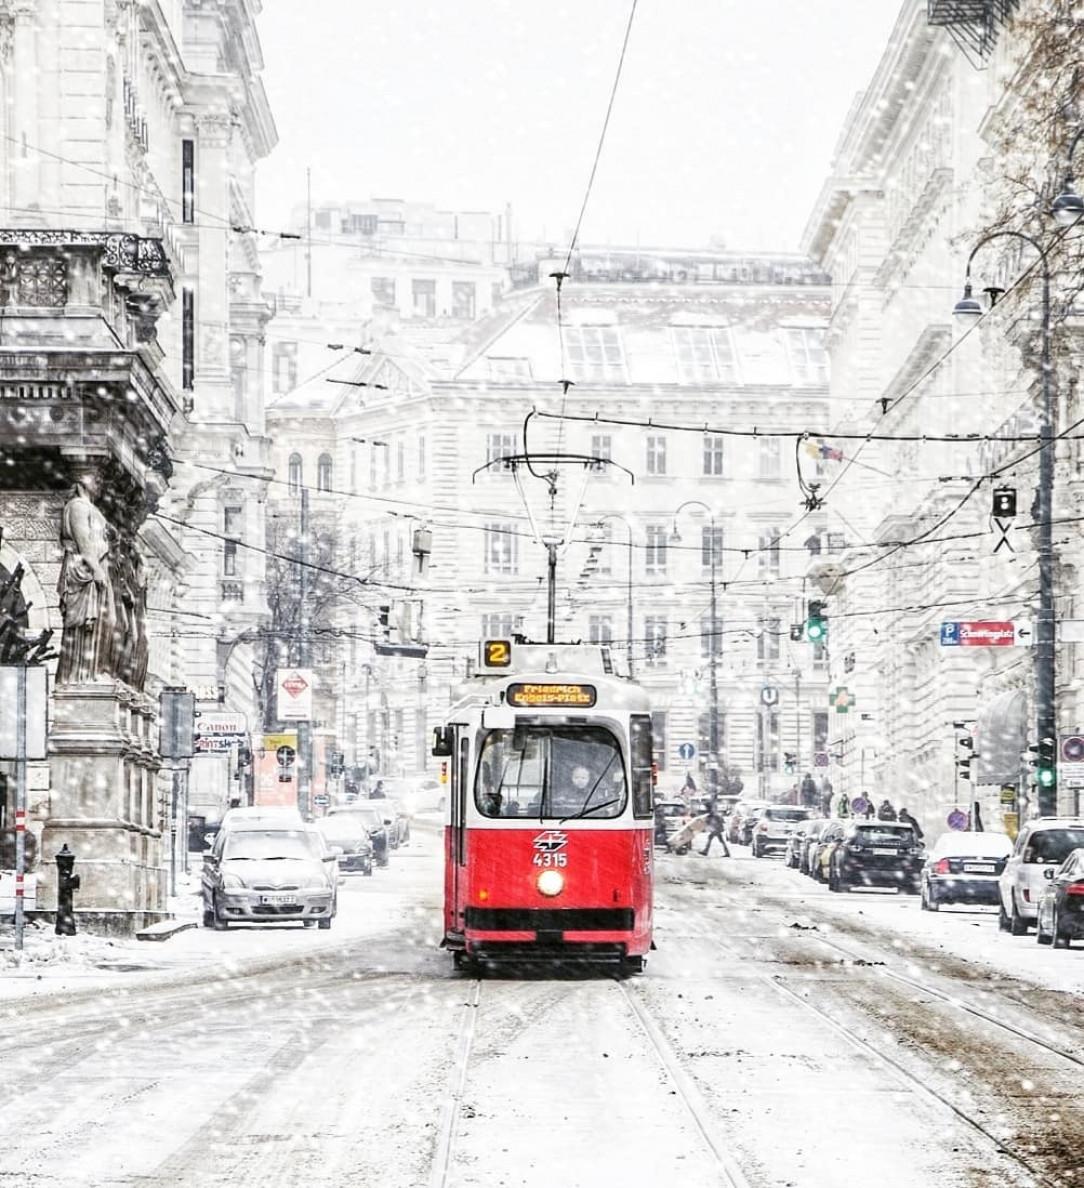 Red tram car in the snow, Vienna, Austria